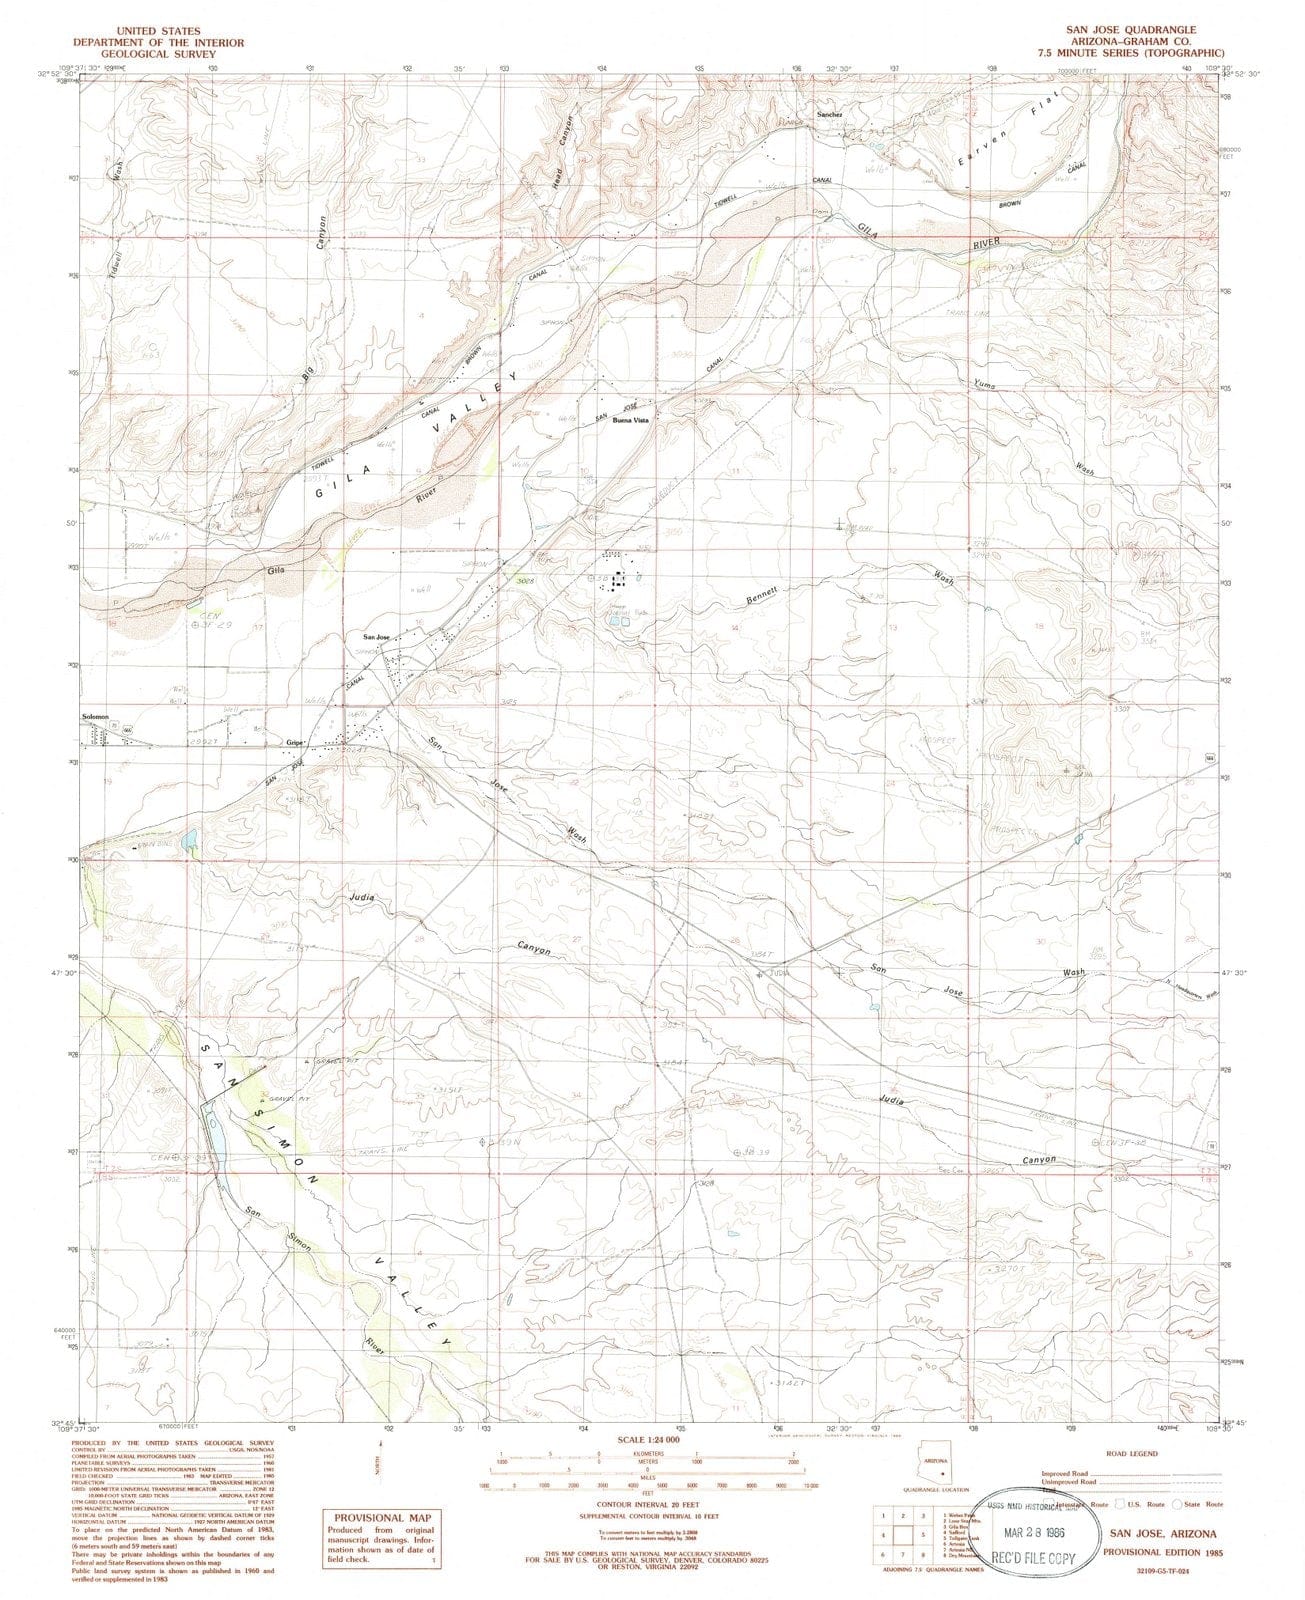 1985 San Jose, AZ - Arizona - USGS Topographic Map